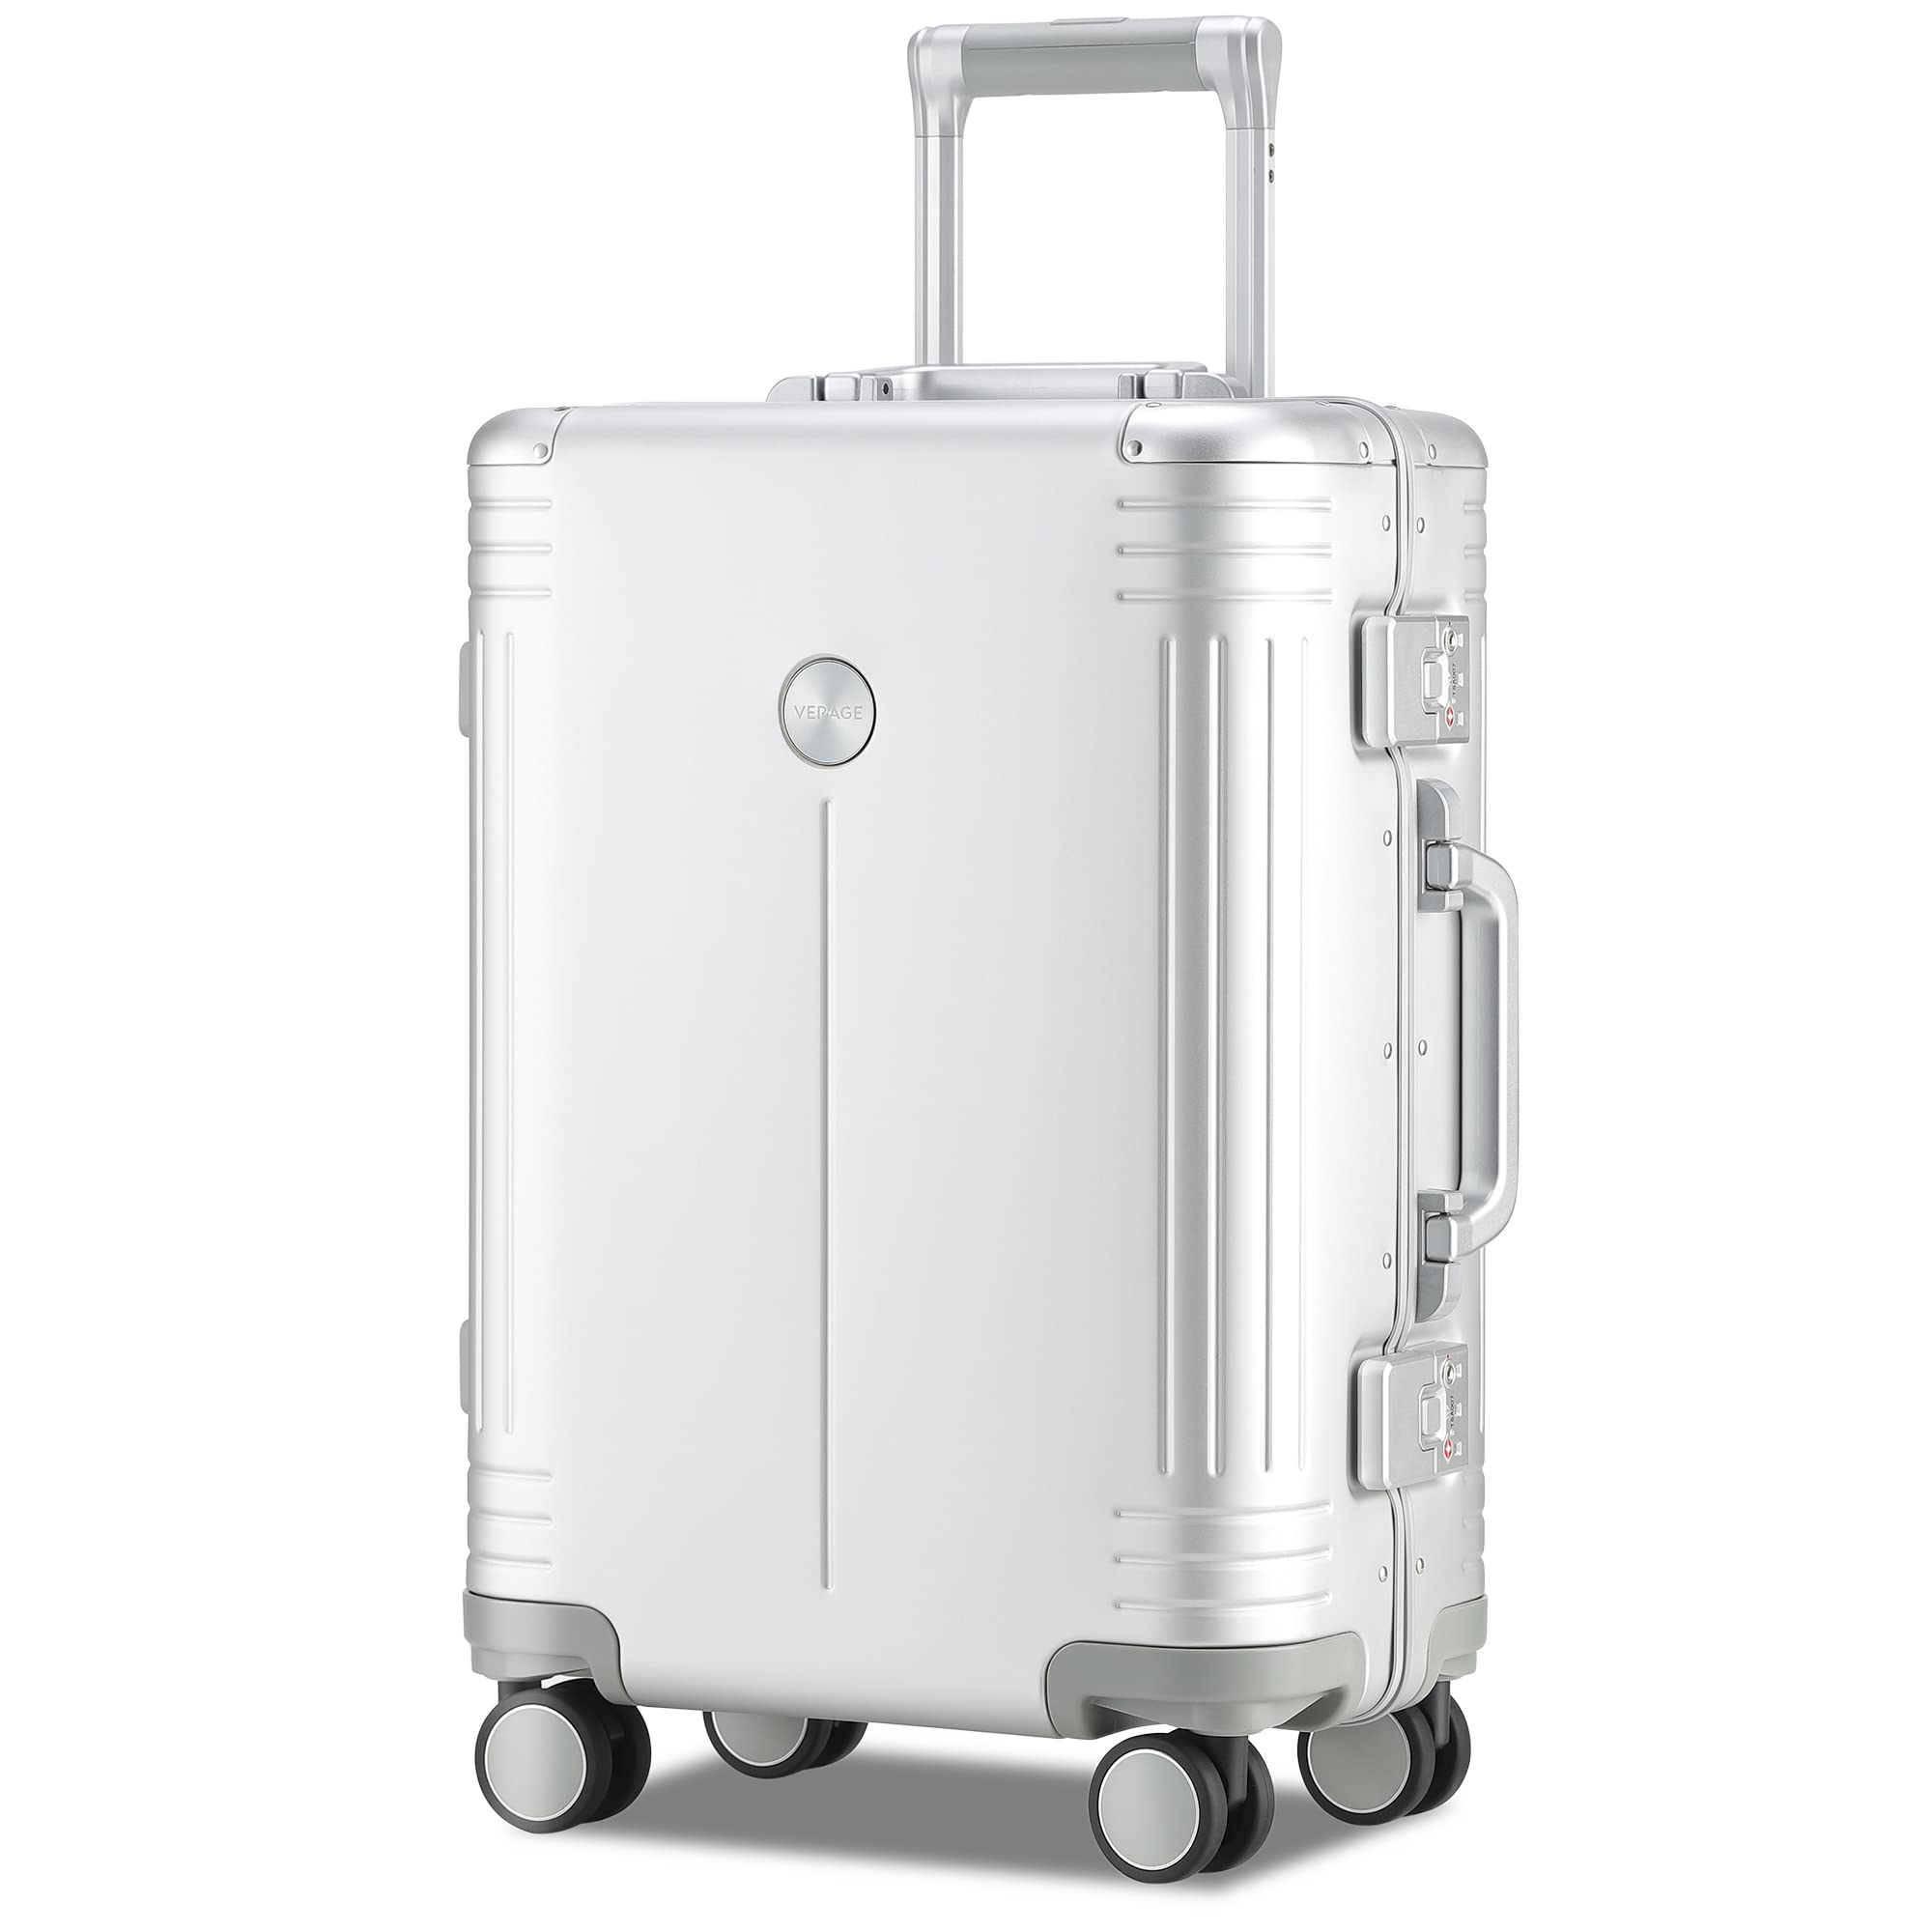 VERAgE Birmingham Aluminum carry On Suitcase, Hardside International Spinner Luggage,Silver, IATA carry-On 20-Inch